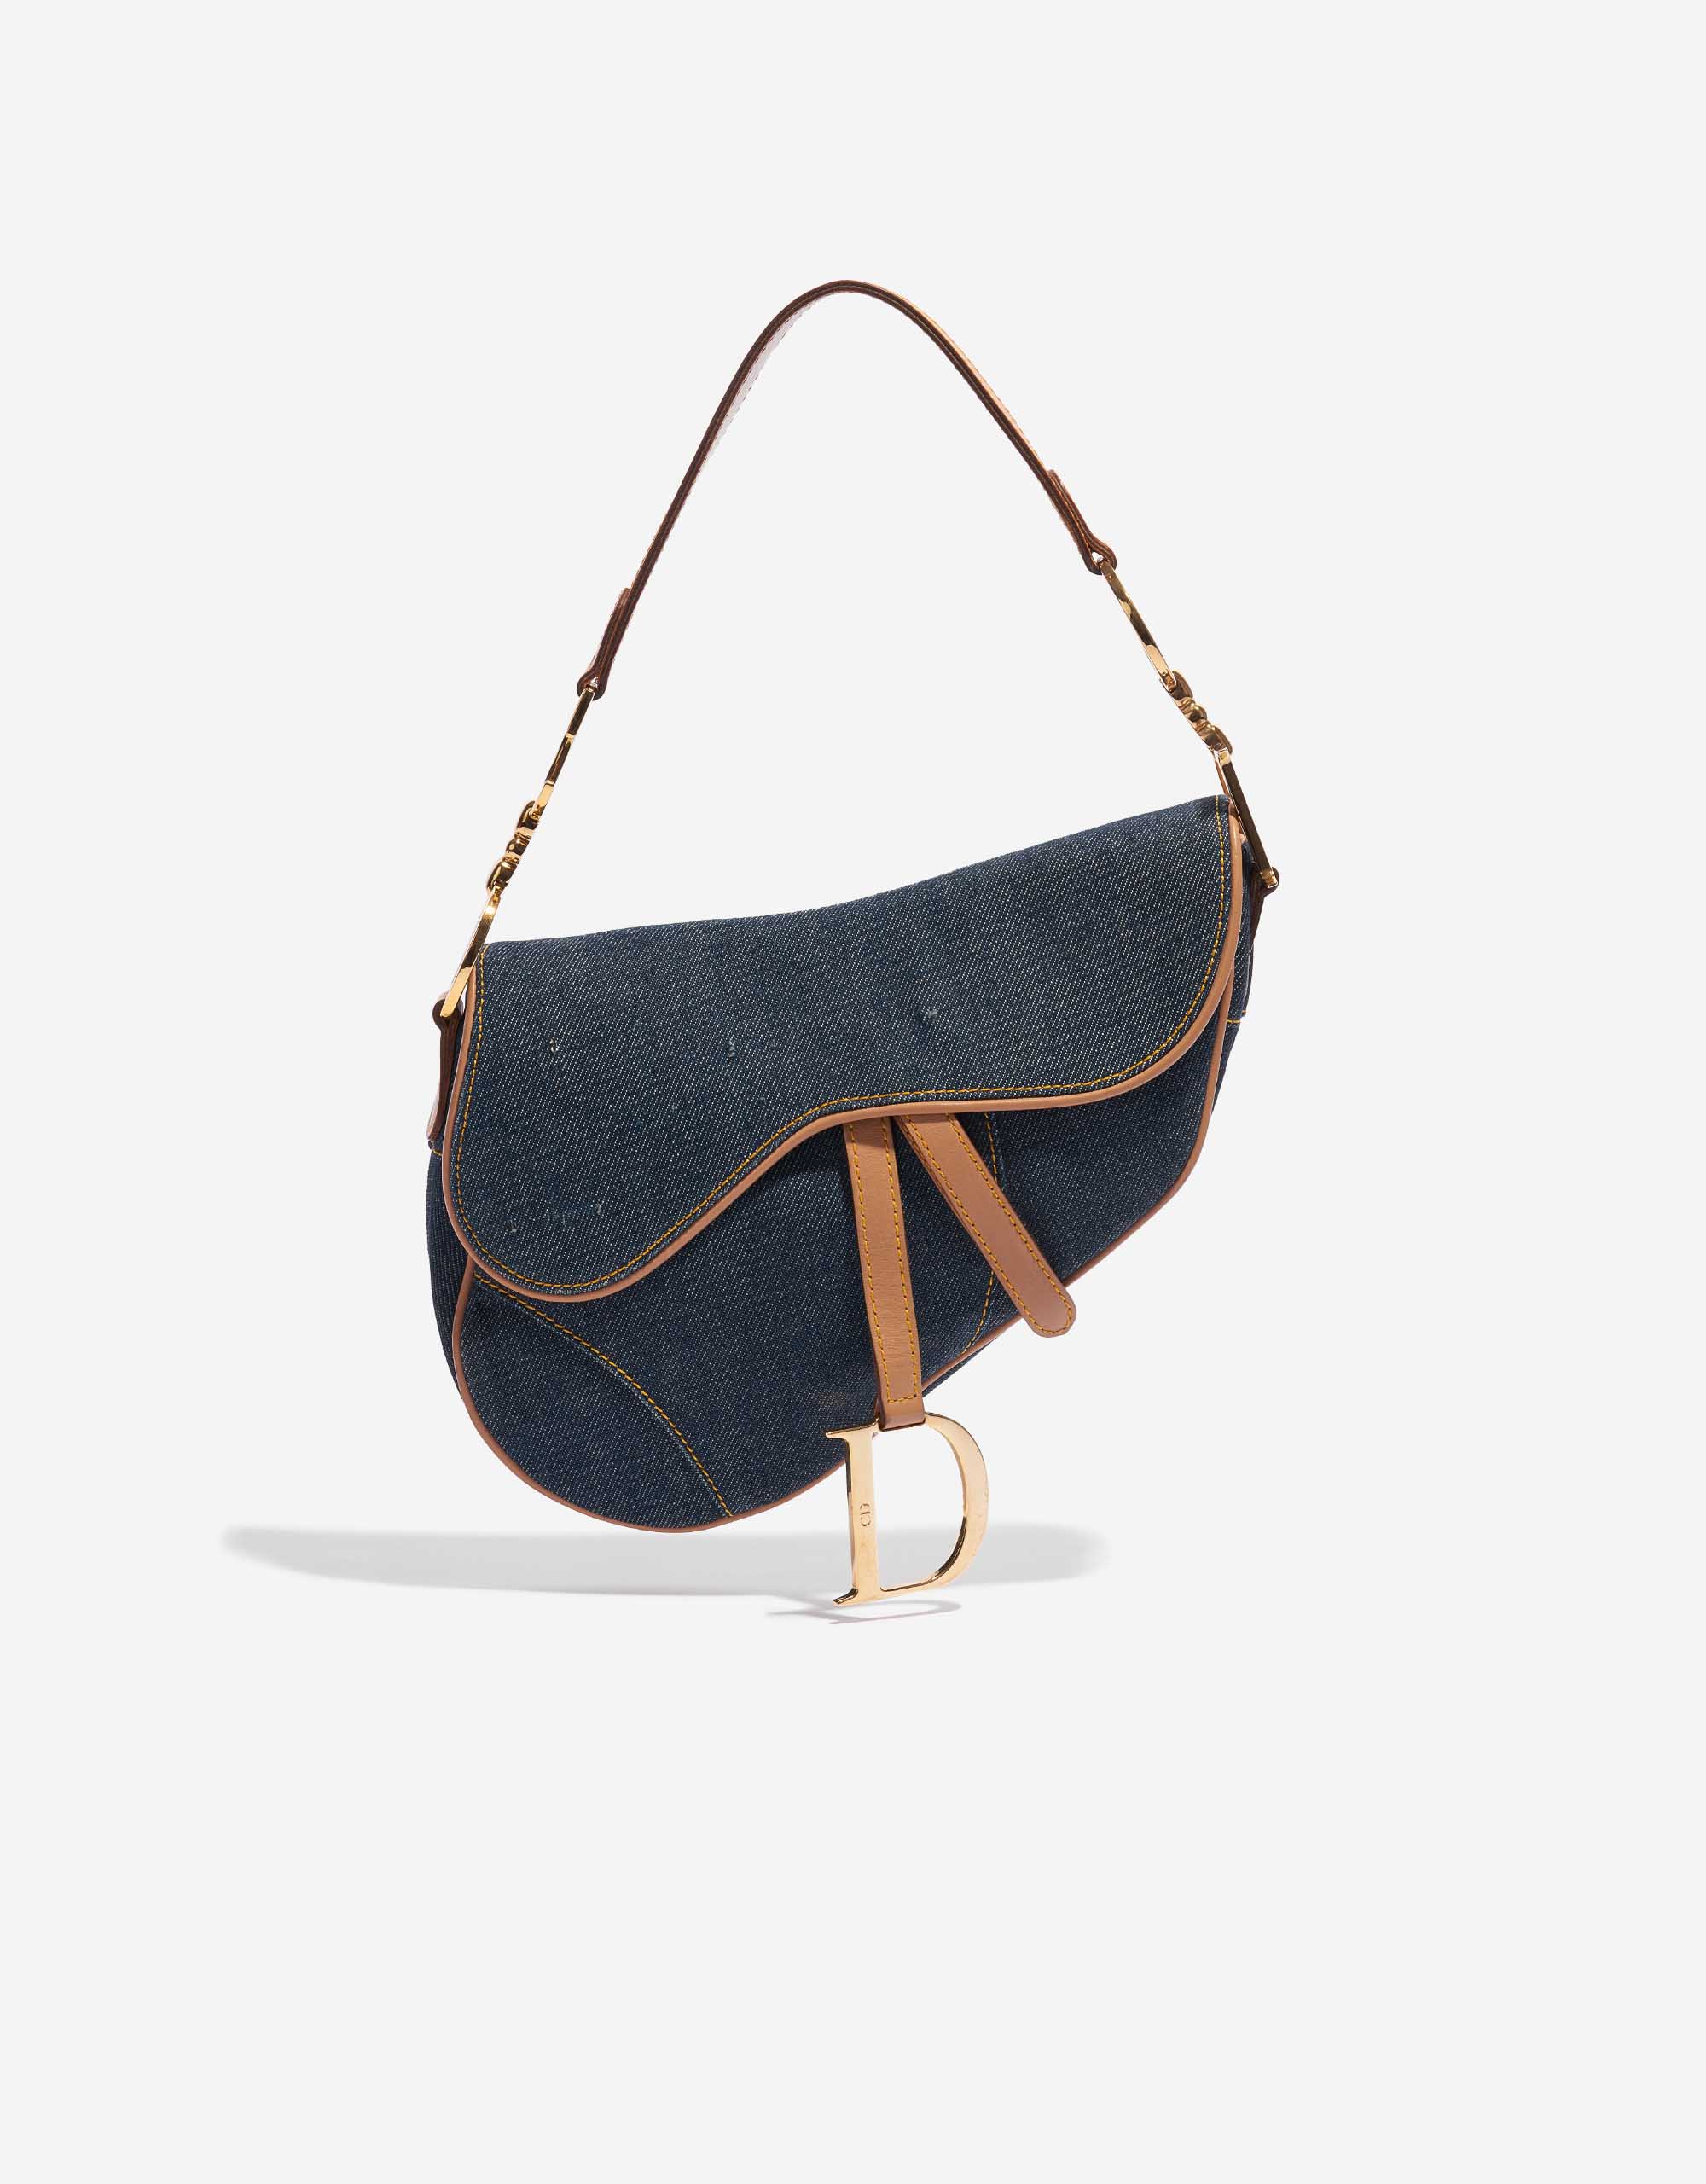 Dior Saddle Bag Styling - Alyssa Smirnov